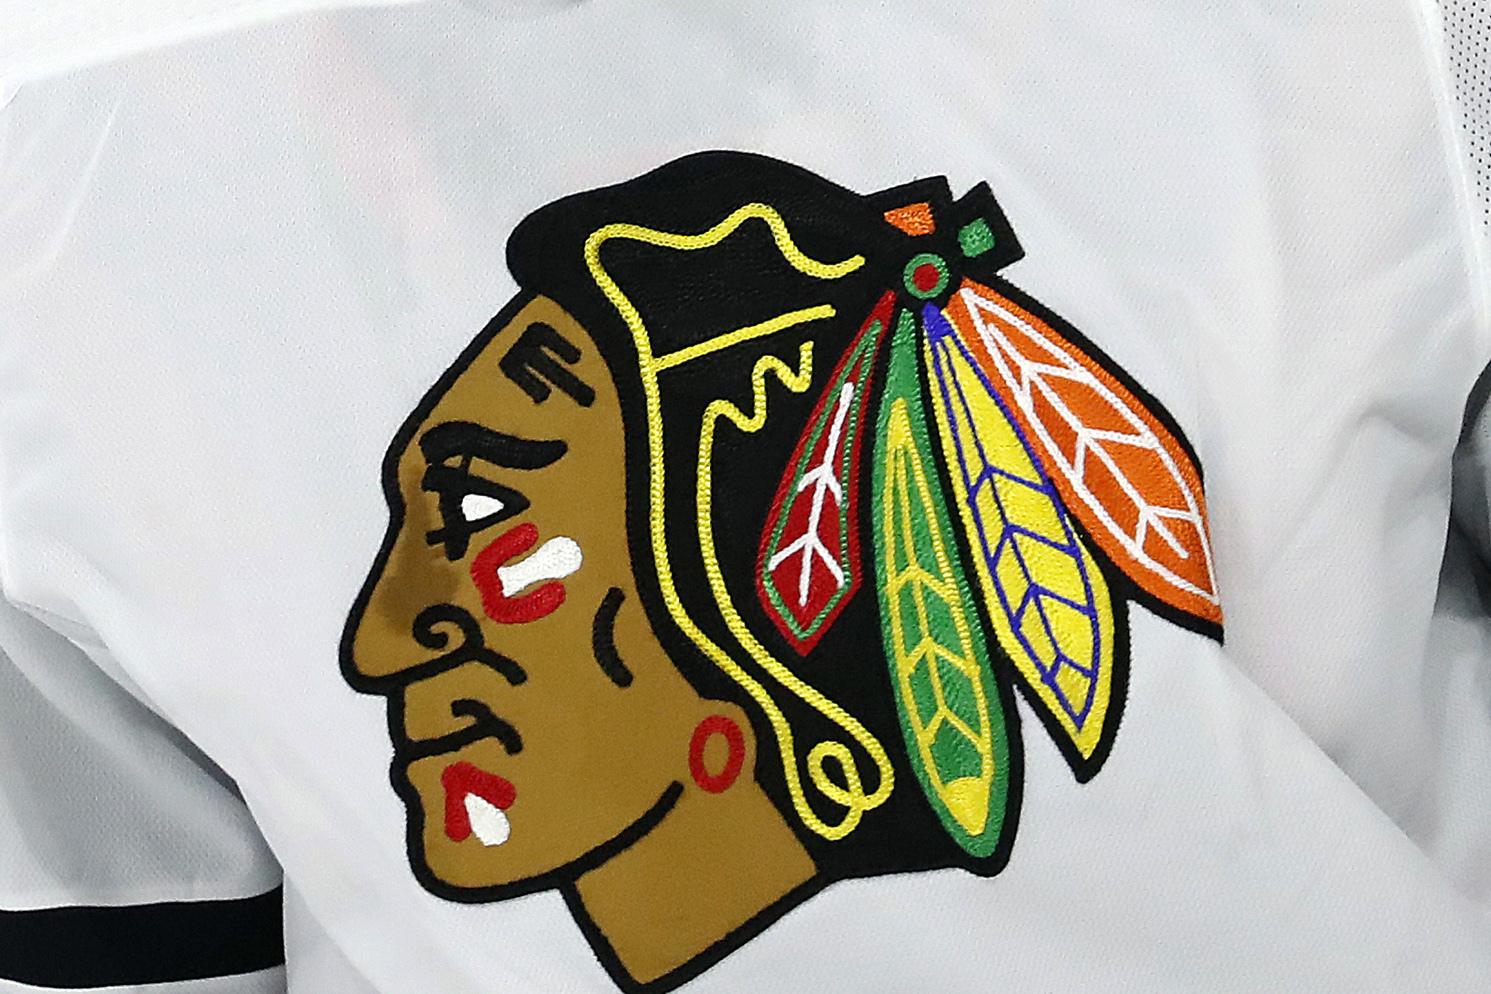 Chicago Blackhawks won't wear Pride-themed jerseys, AP source says